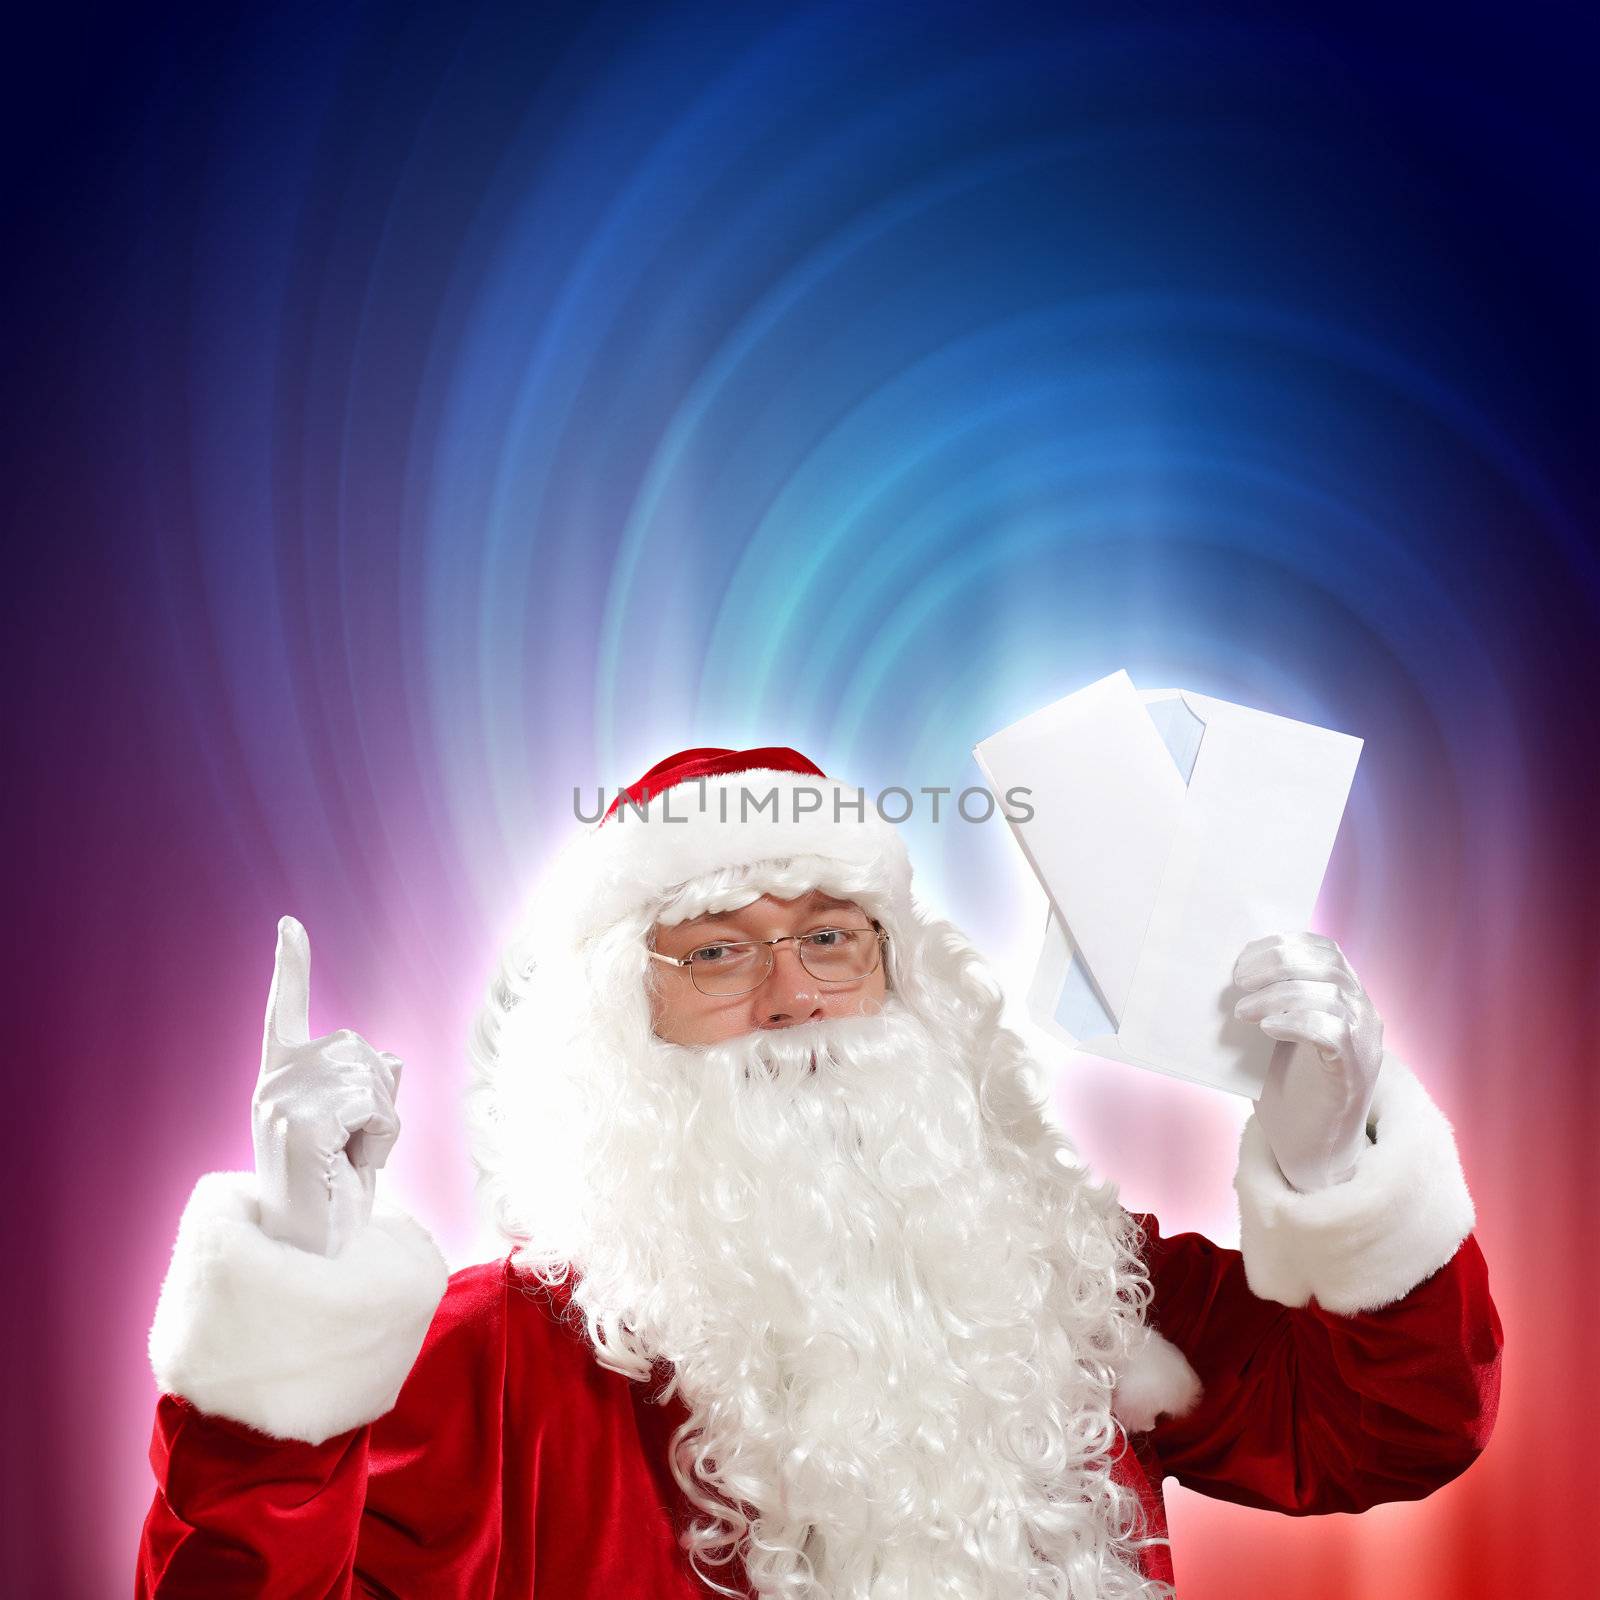 Santa holding Christmas letters and looking at camera